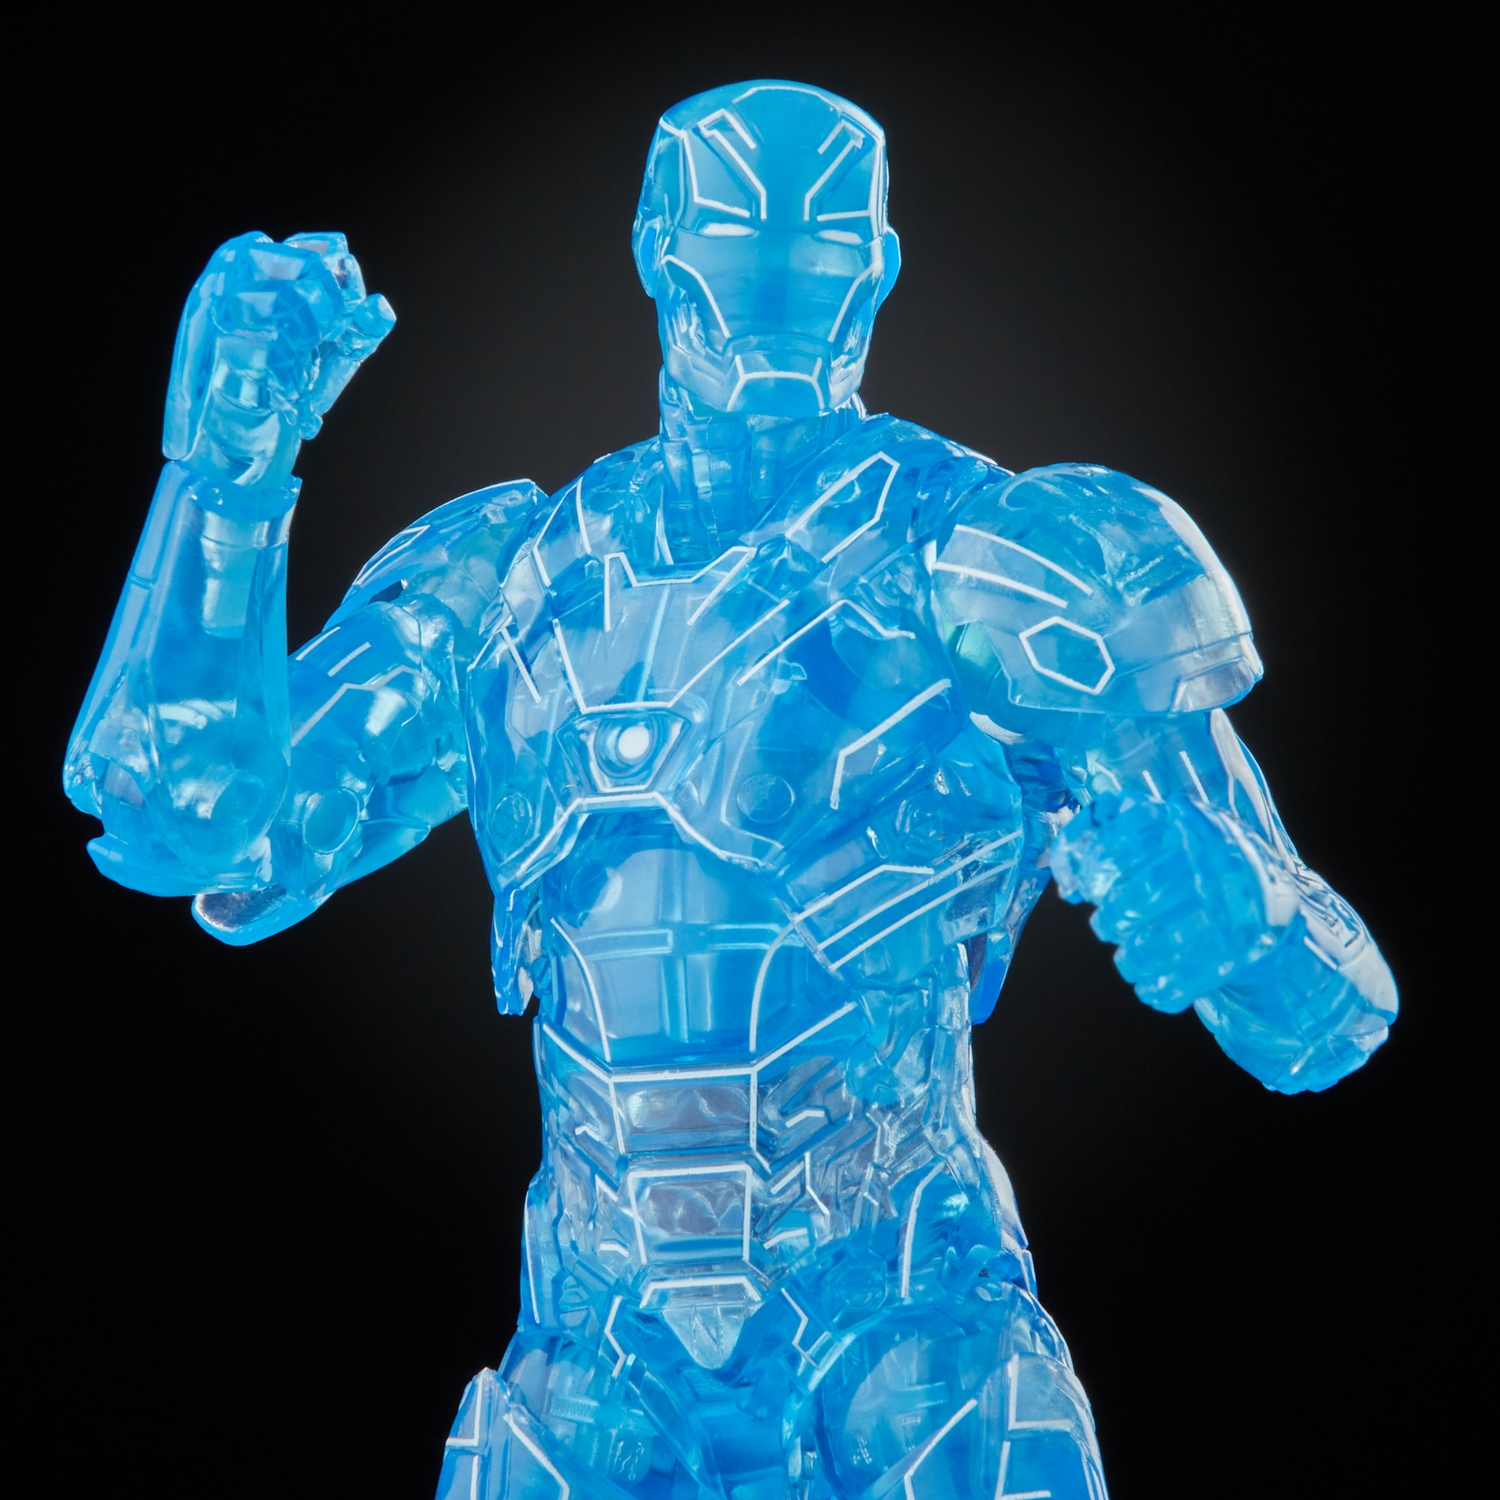 MARVEL LEGENDS SERIES 6-INCH IRON MAN Figure Assortment - Hologram Iron Man - oop (5).jpg